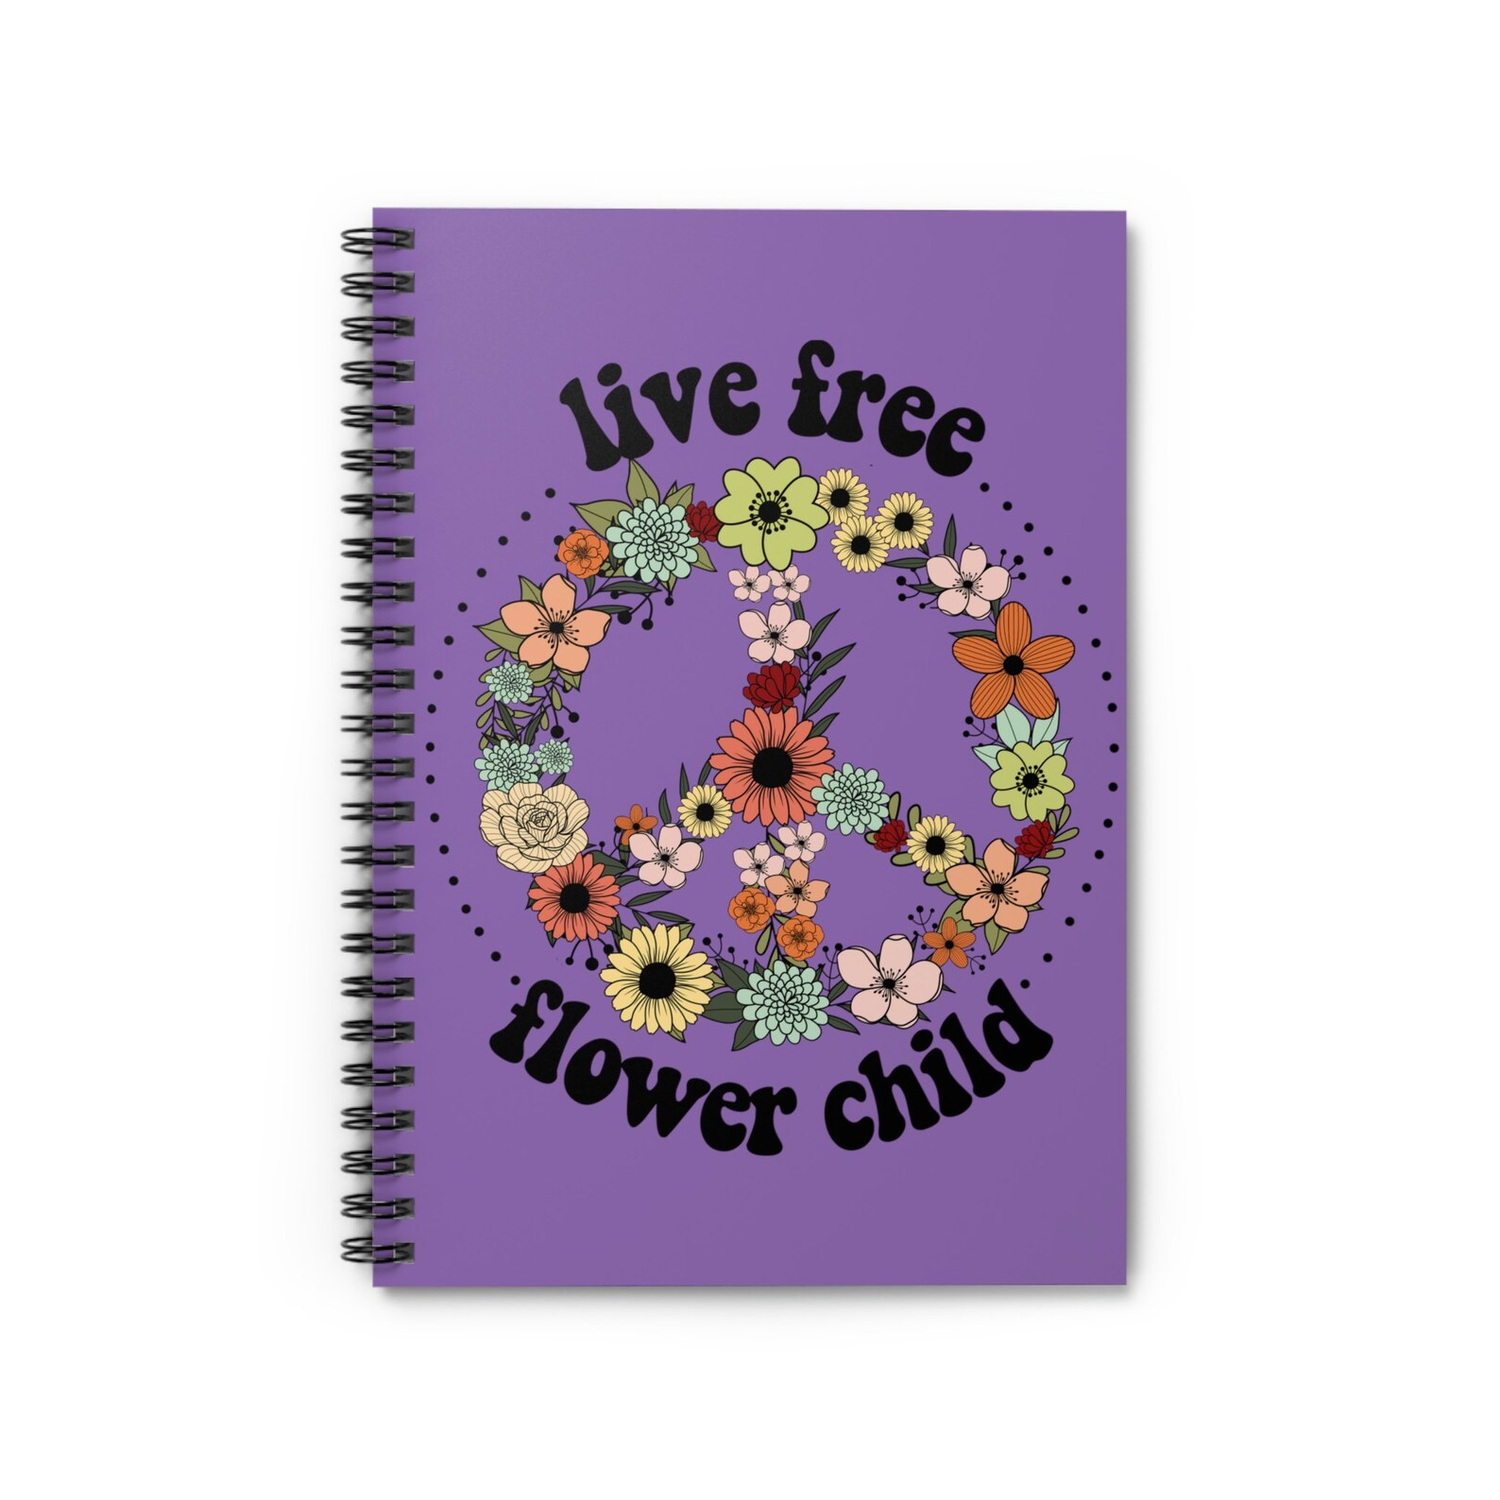 Live Free Flower Child Journals & Diaries by TheGlassyLass.com